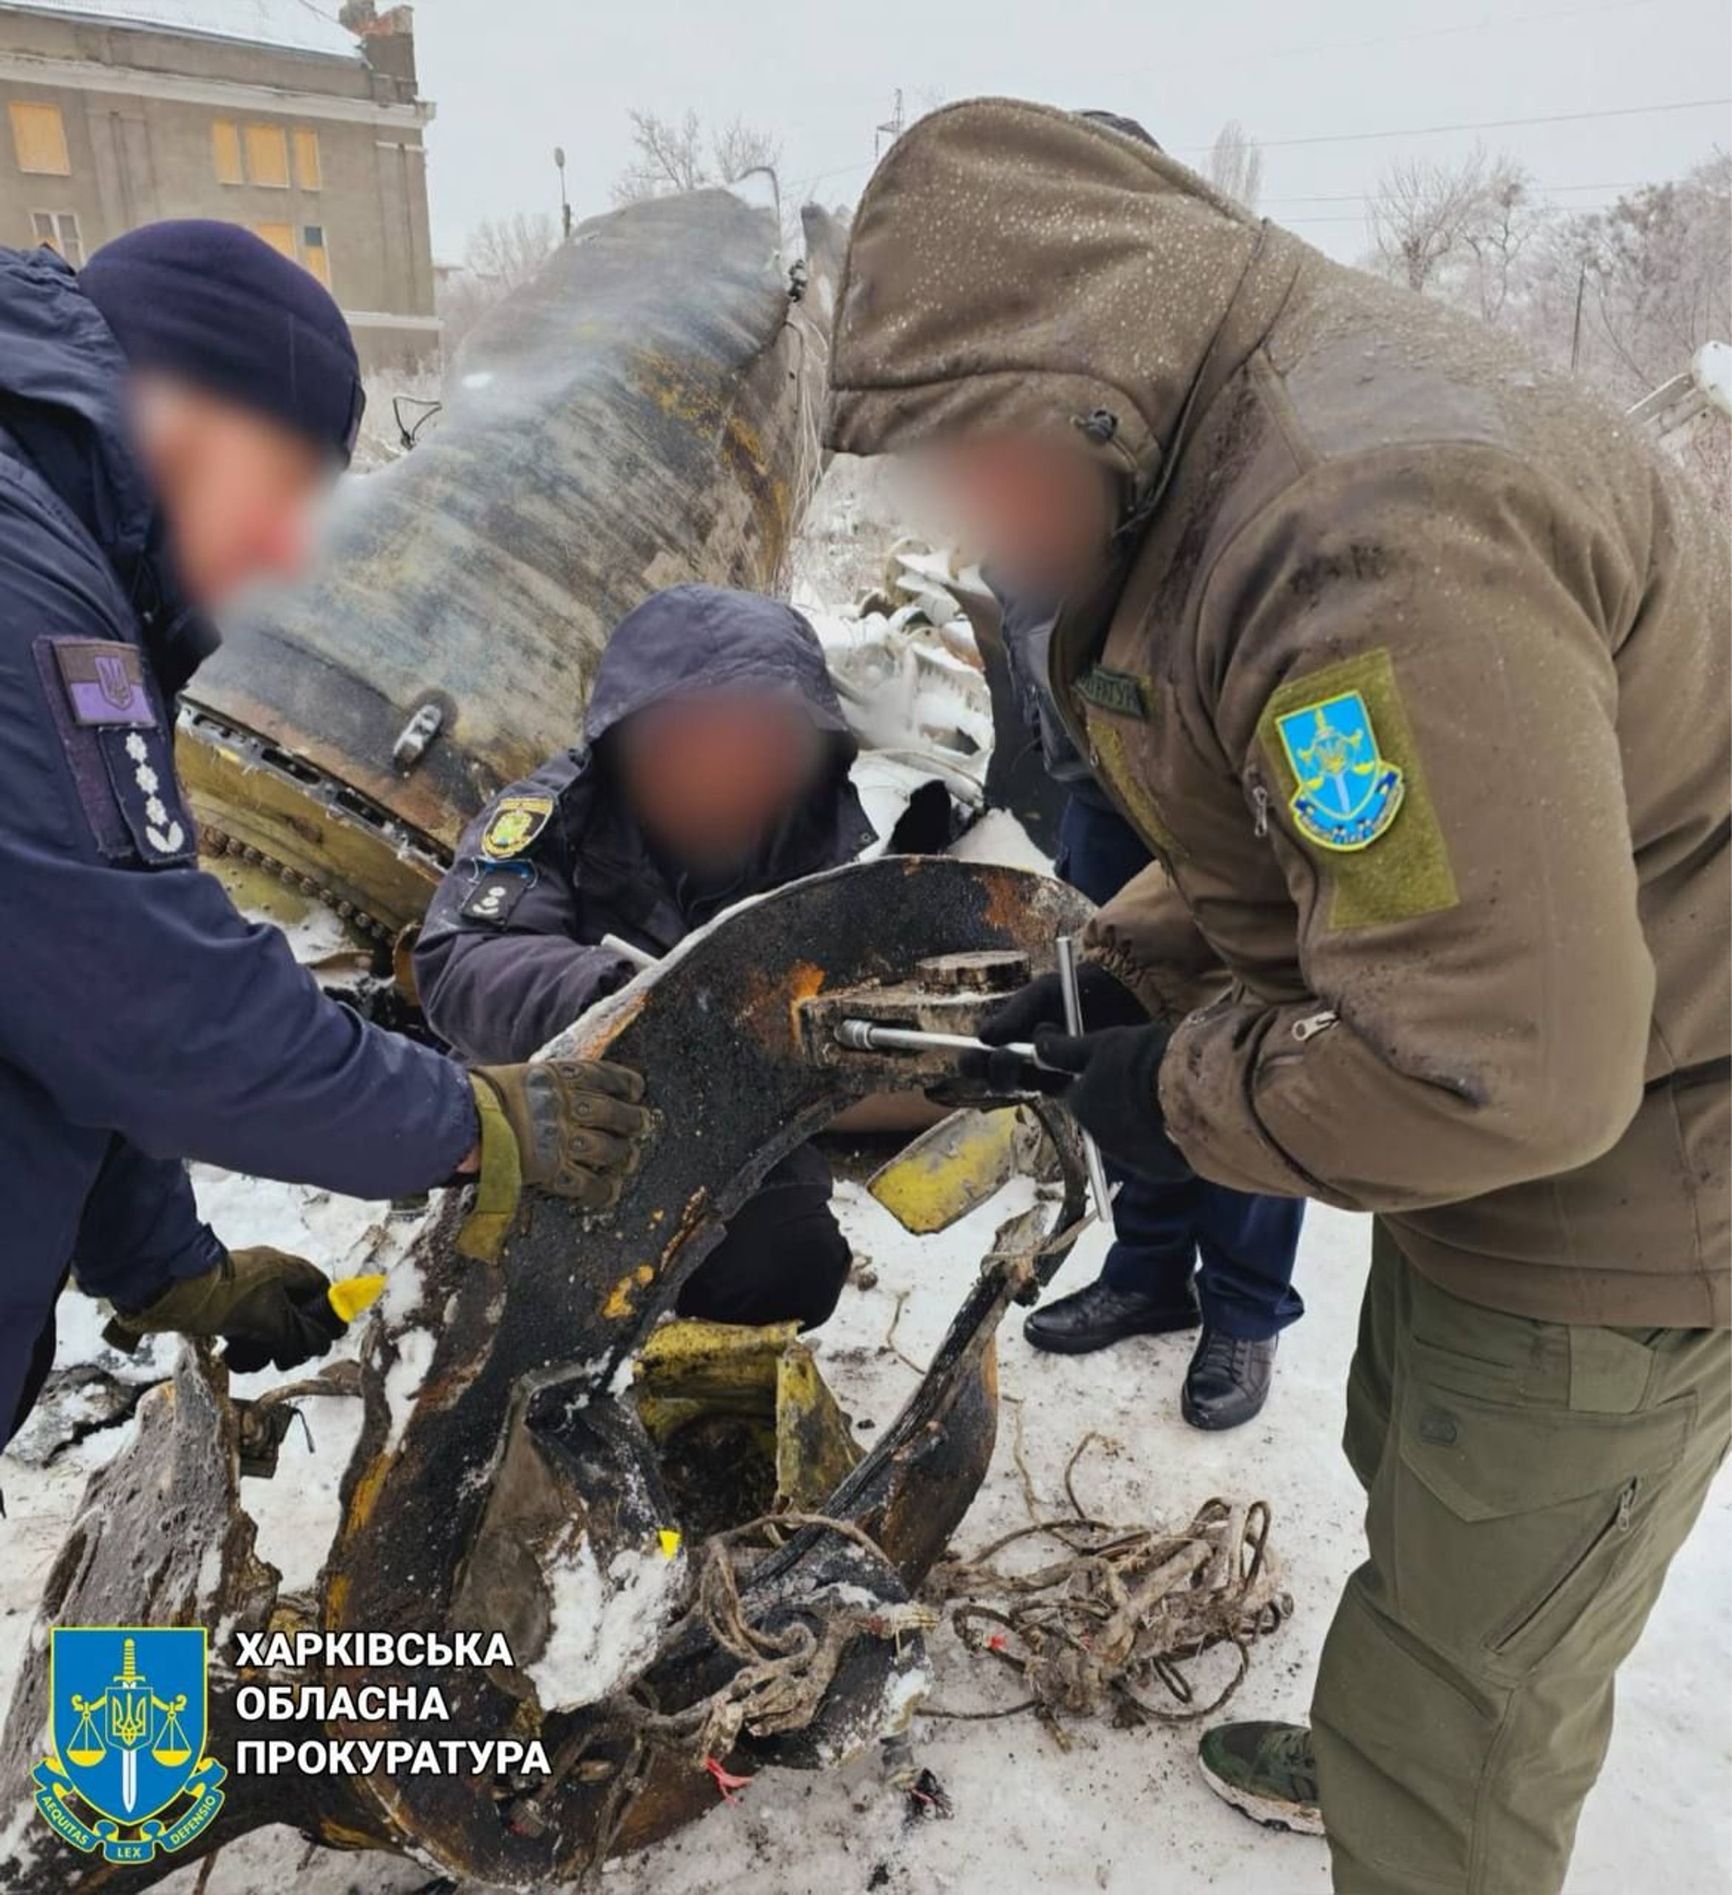 Missile debris in the Kharkiv Region, Ukraine